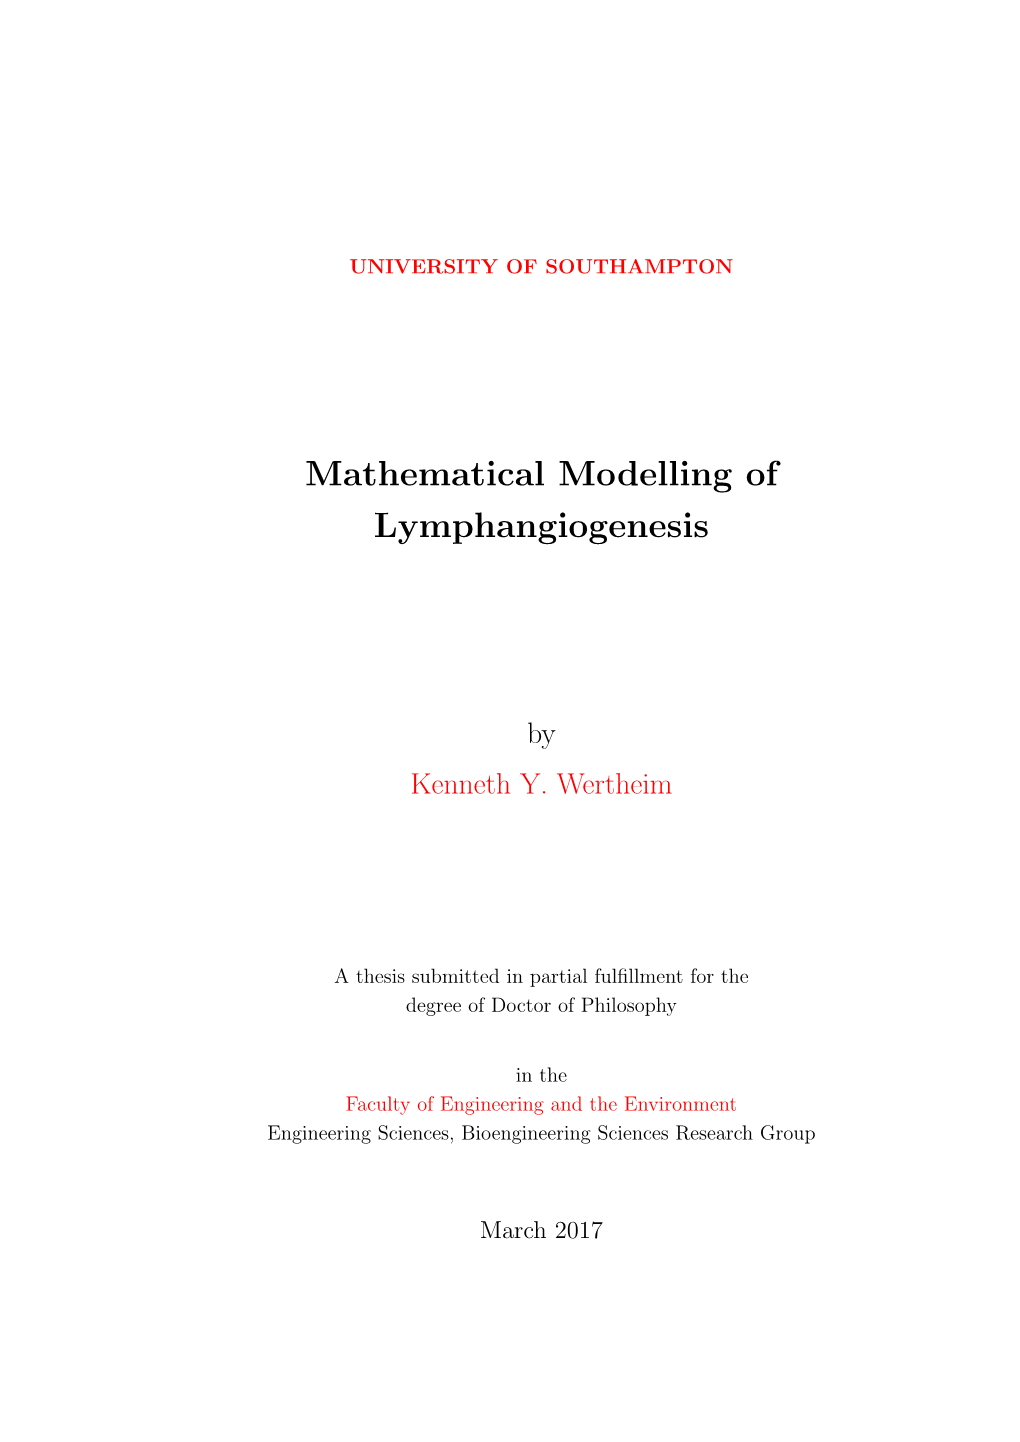 Mathematical Modelling of Lymphangiogenesis